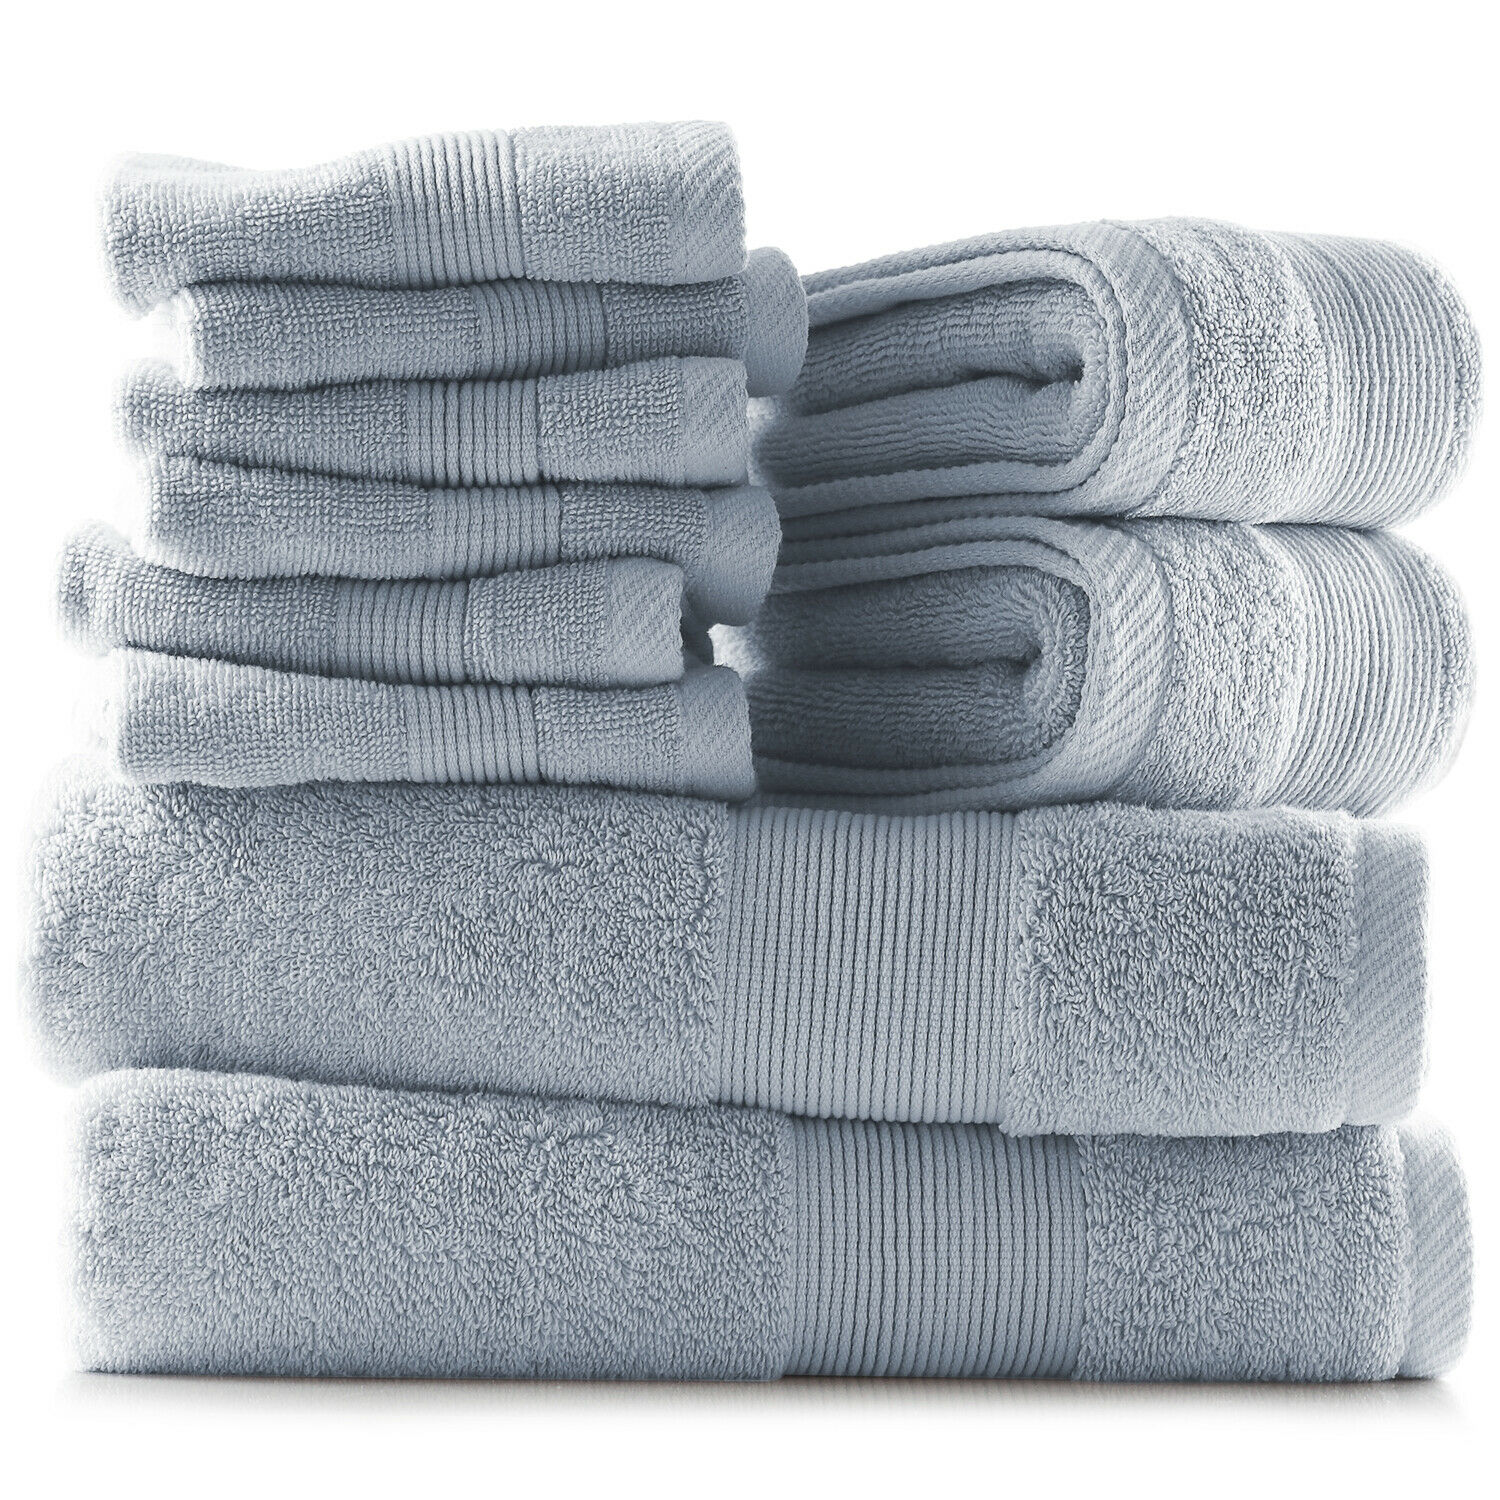 10 Piece Towel Set Ultra Soft Cotton Bath Towels Hand Towels and Washcloths